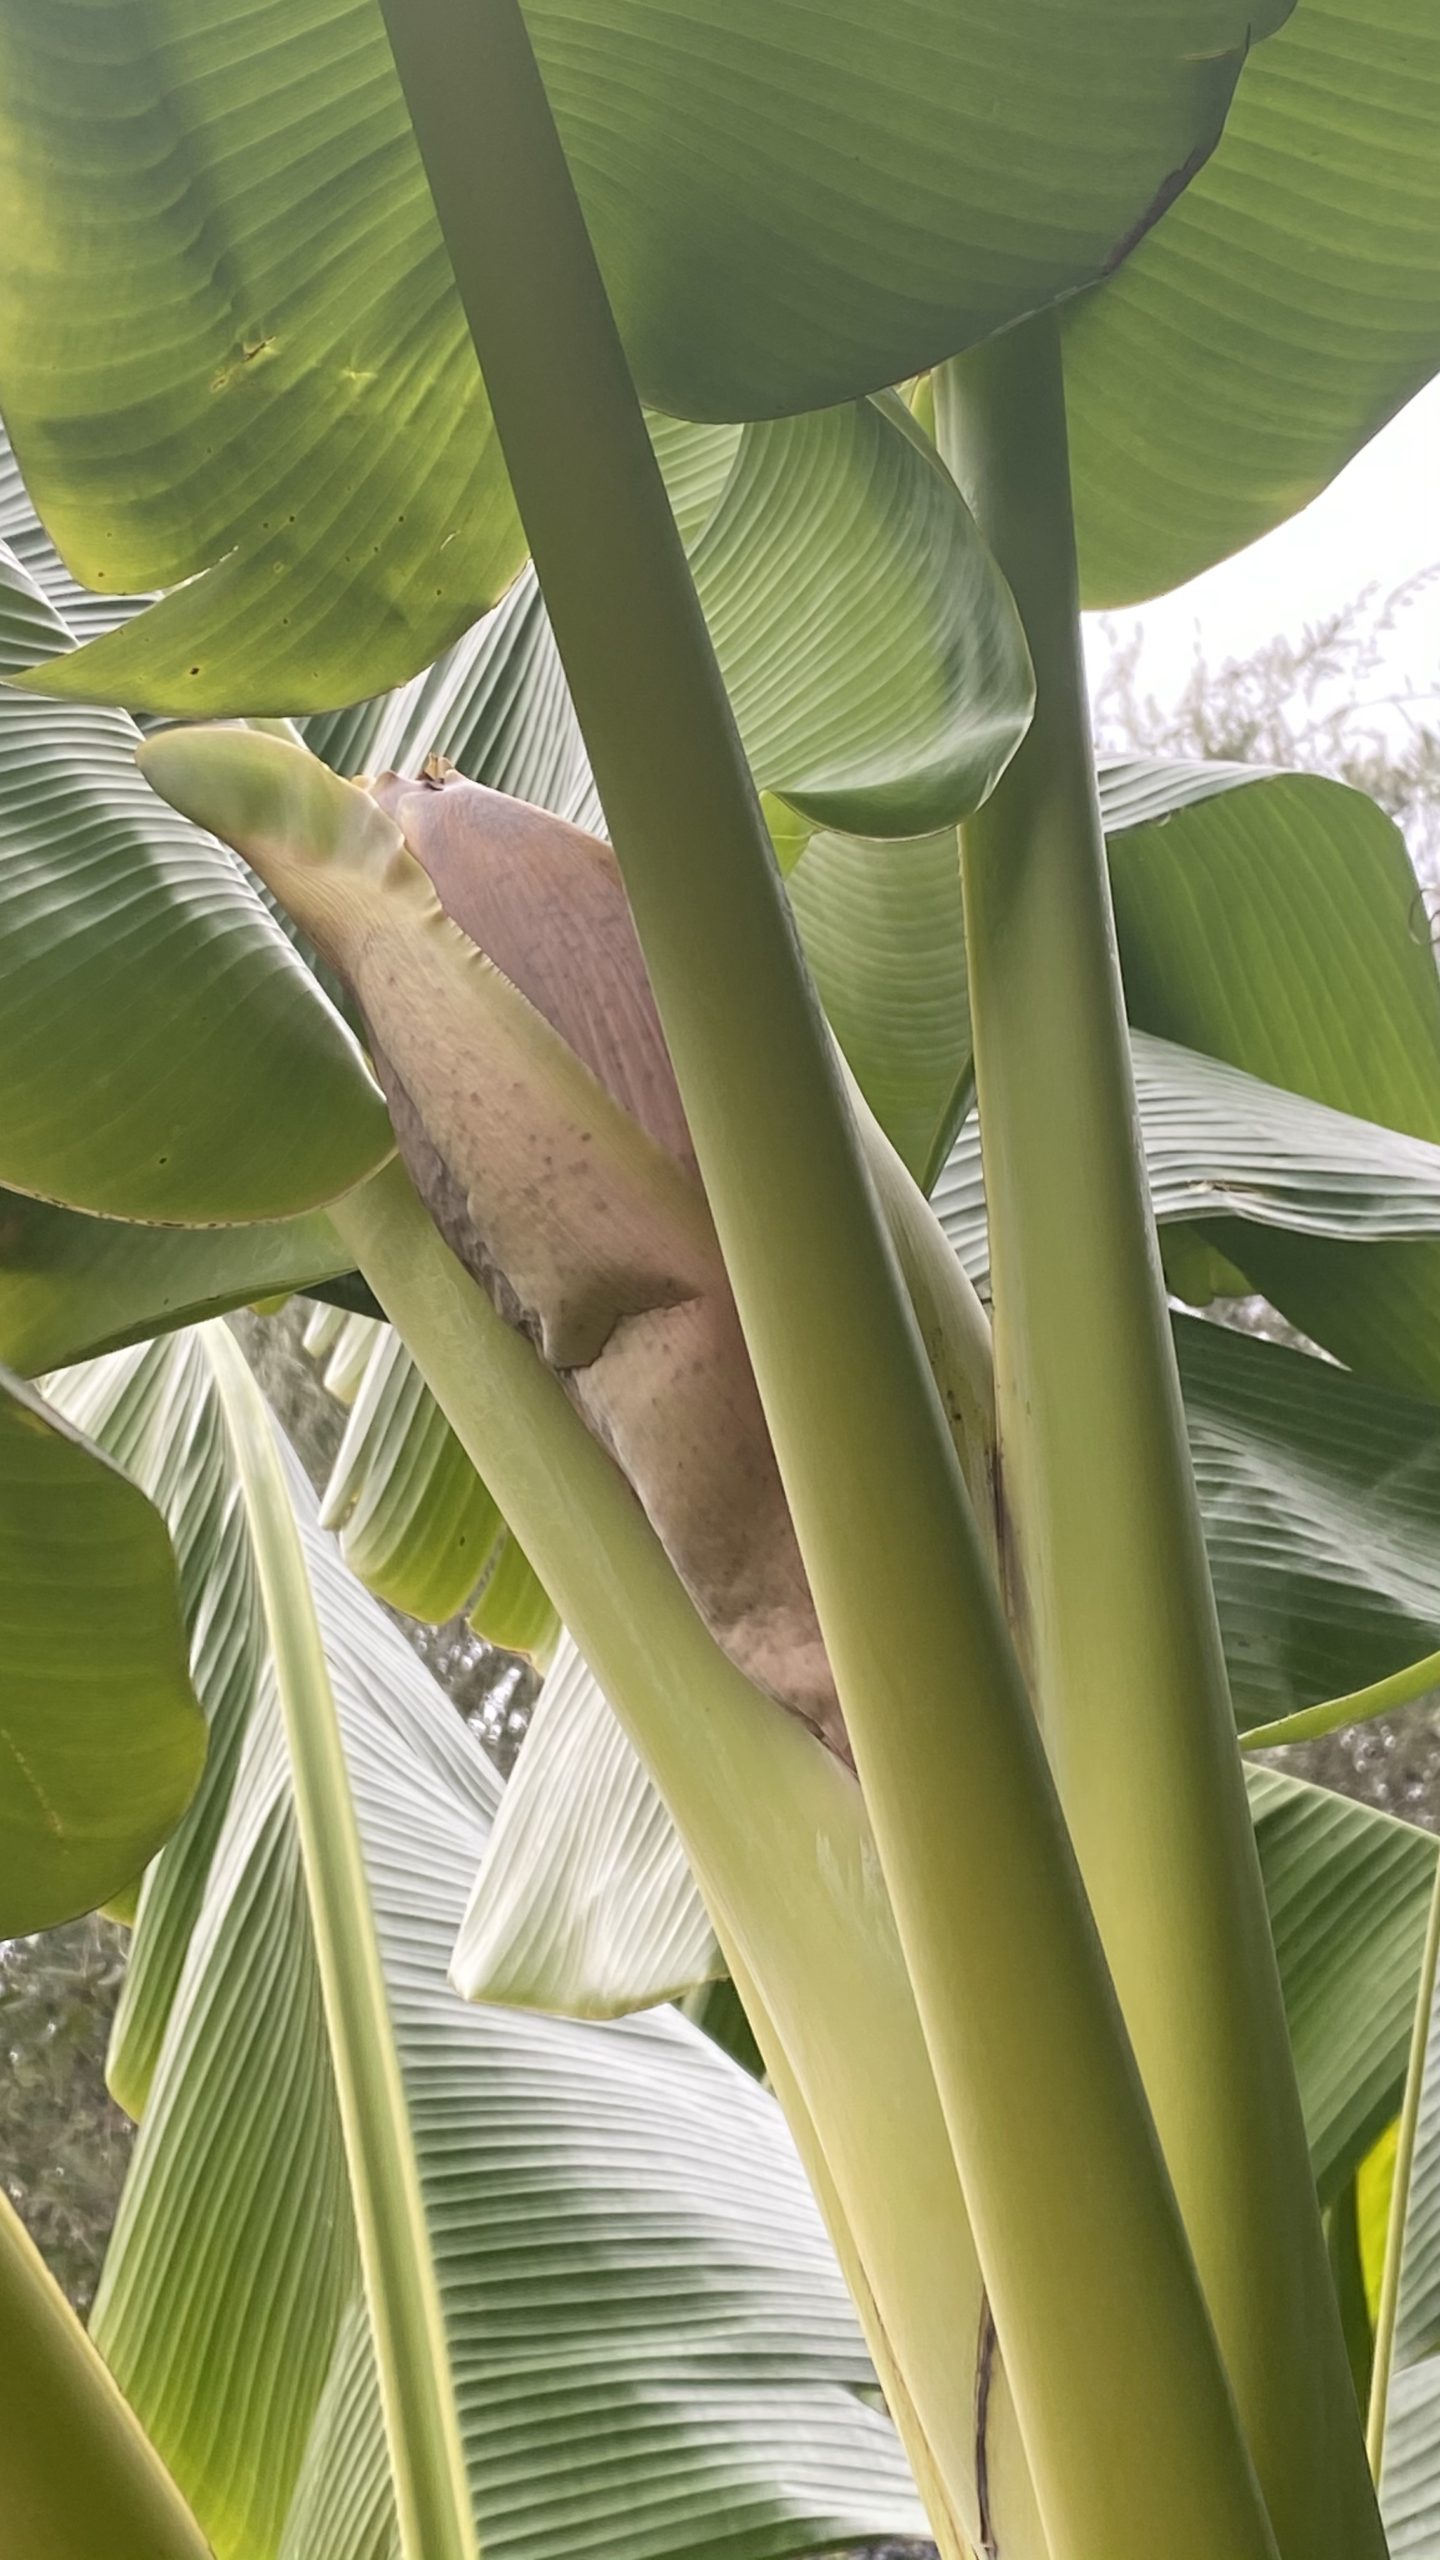 Welcome Back To Banana Tree News – Banaana Tree News